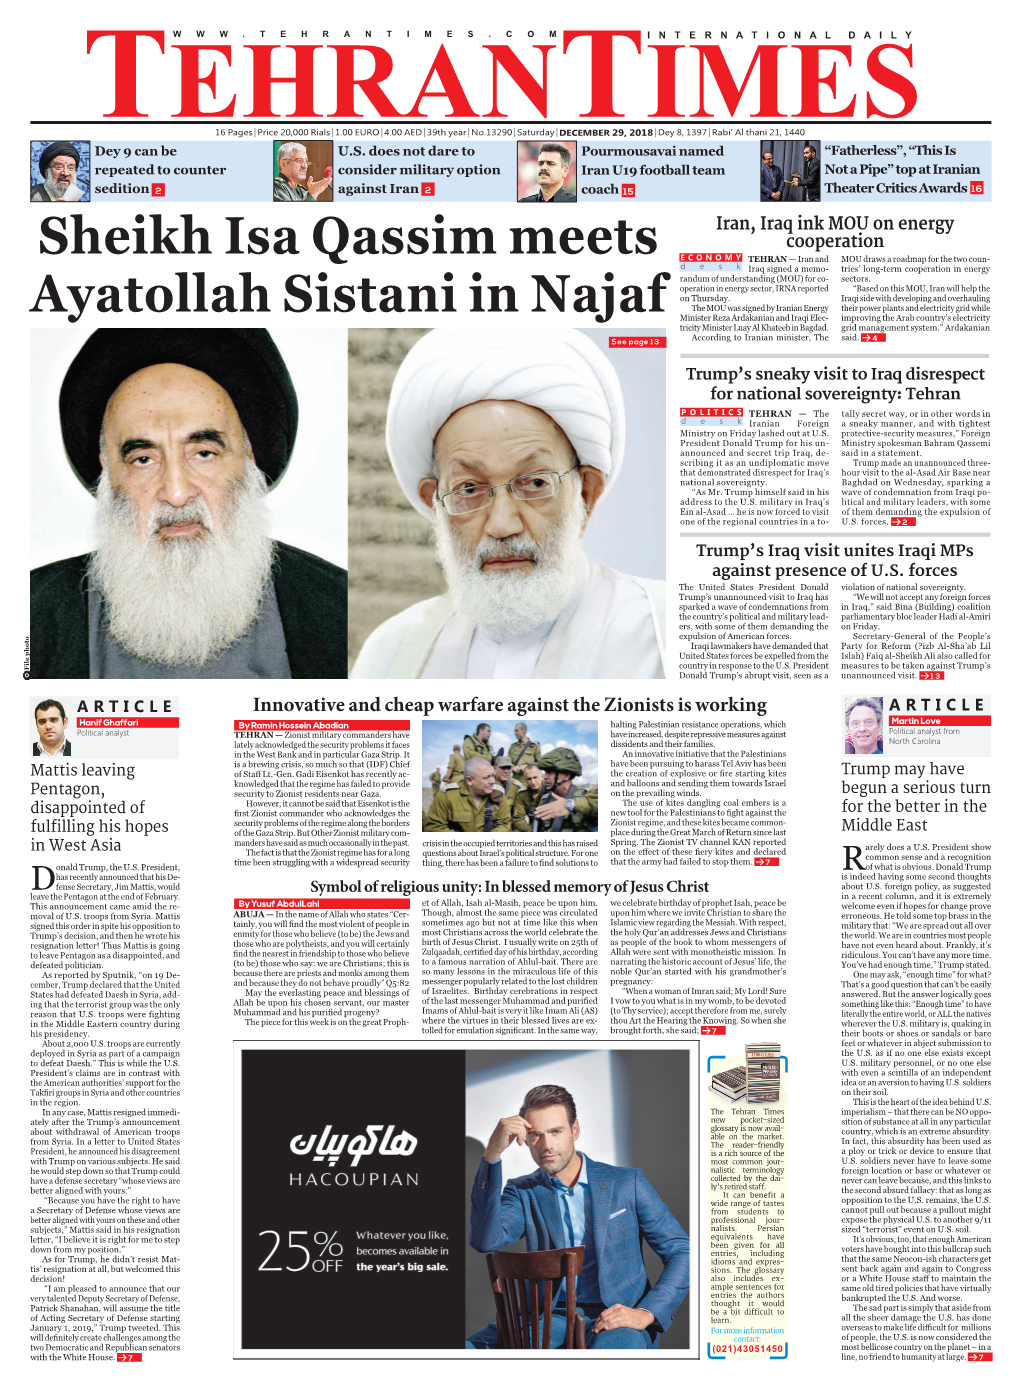 Sheikh Isa Qassim Meets Ayatollah Sistani in Najaf